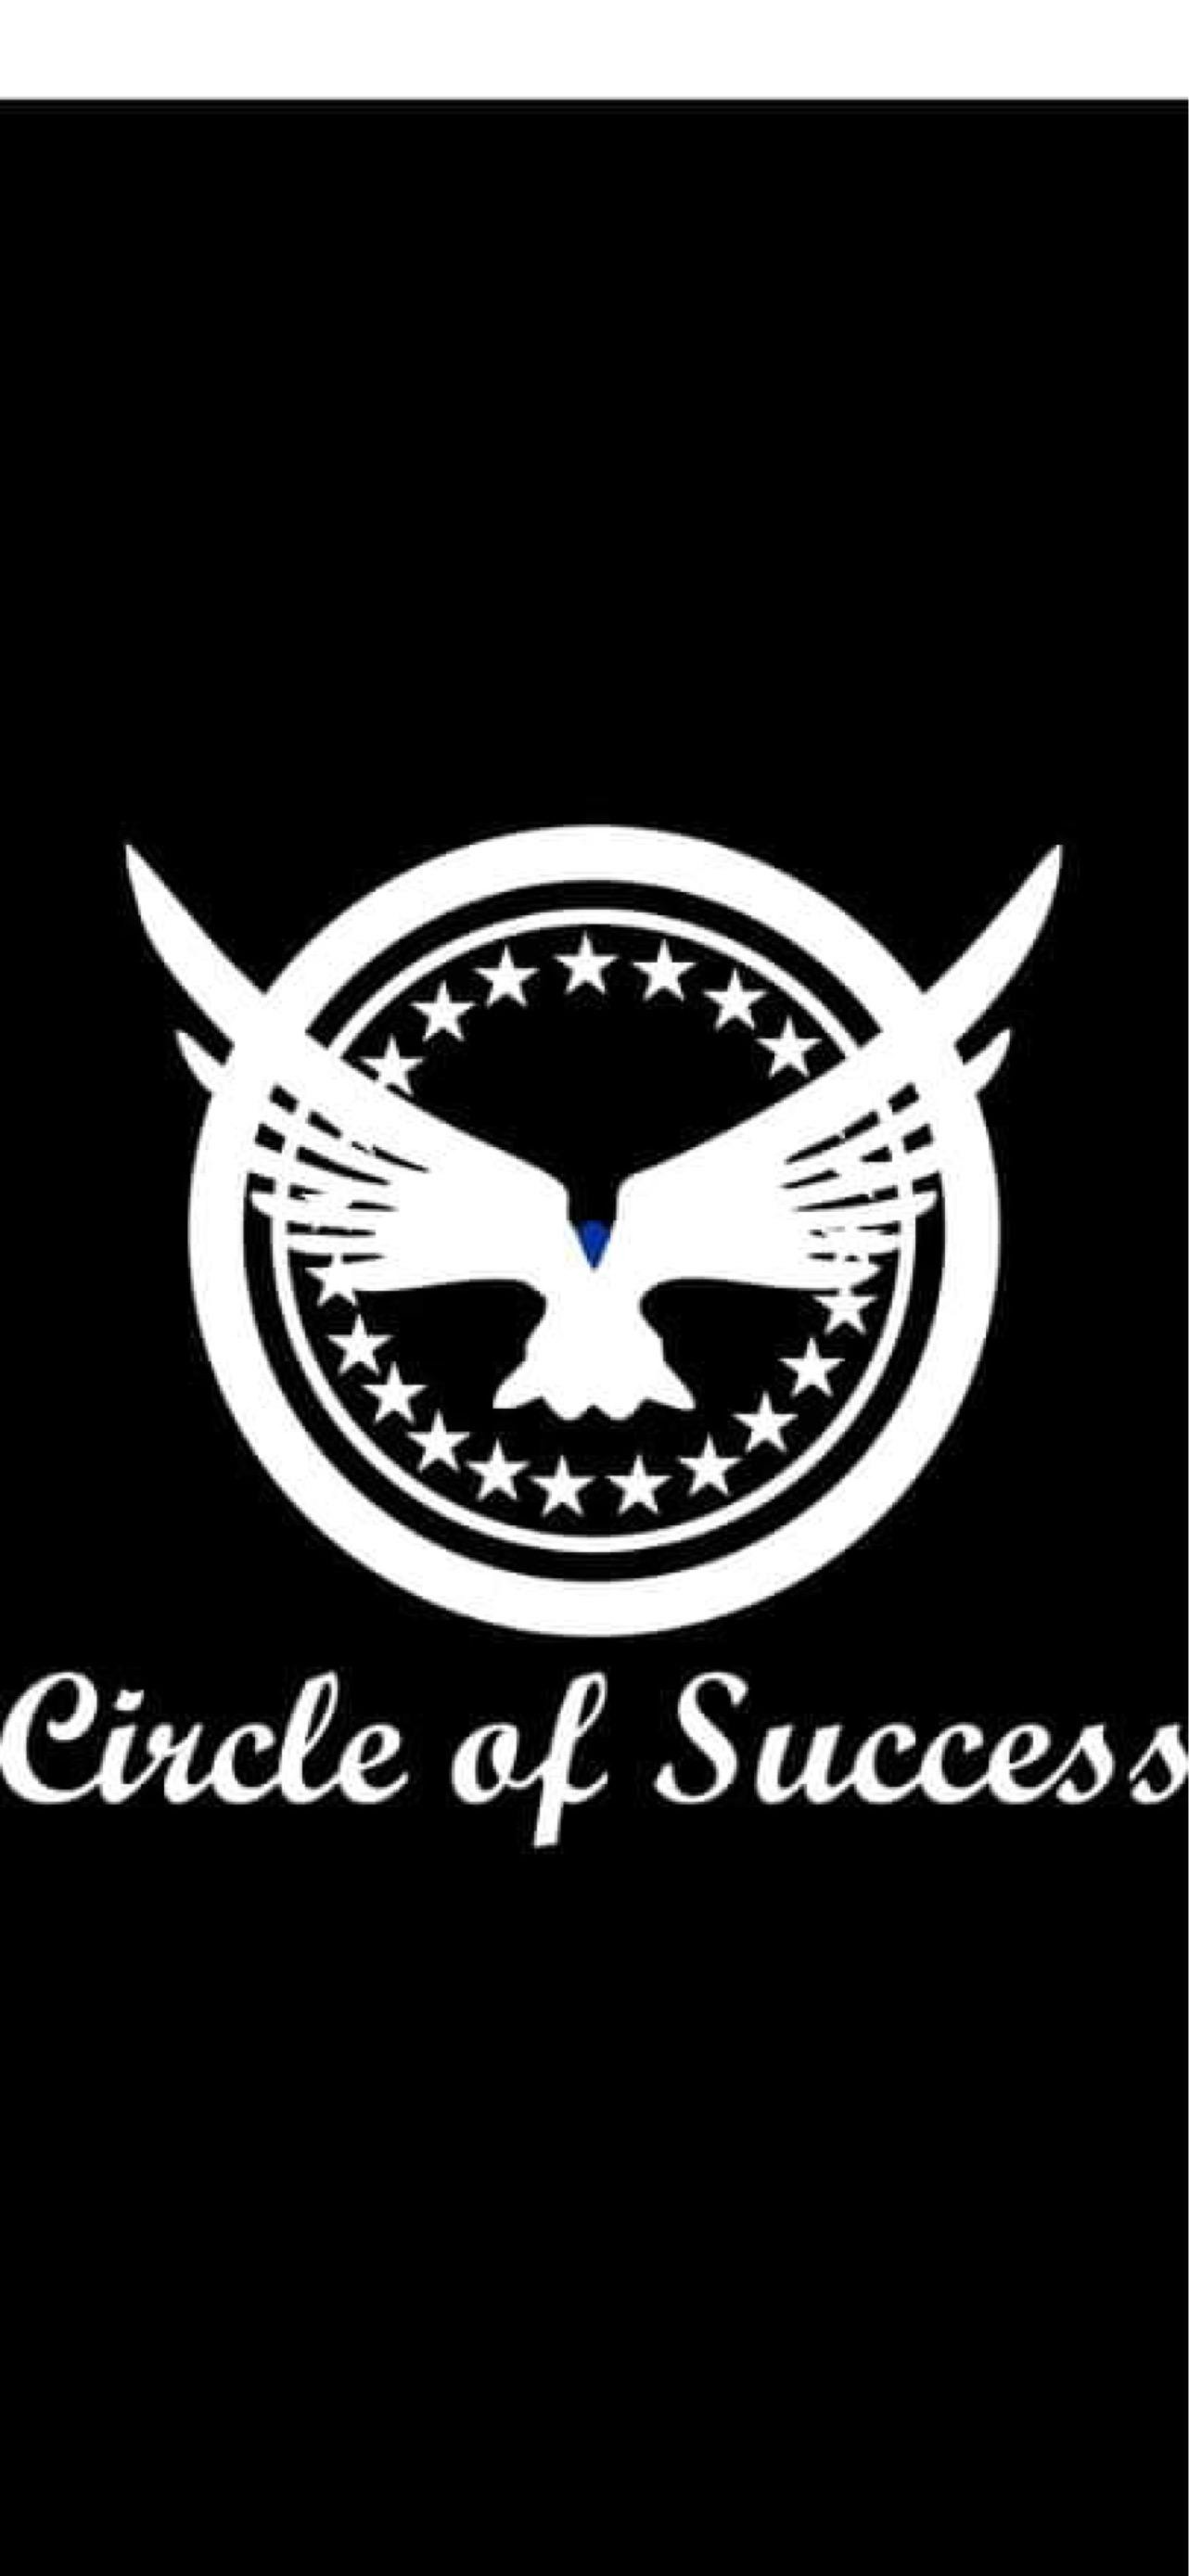 CIRCLE OF SUCCESS